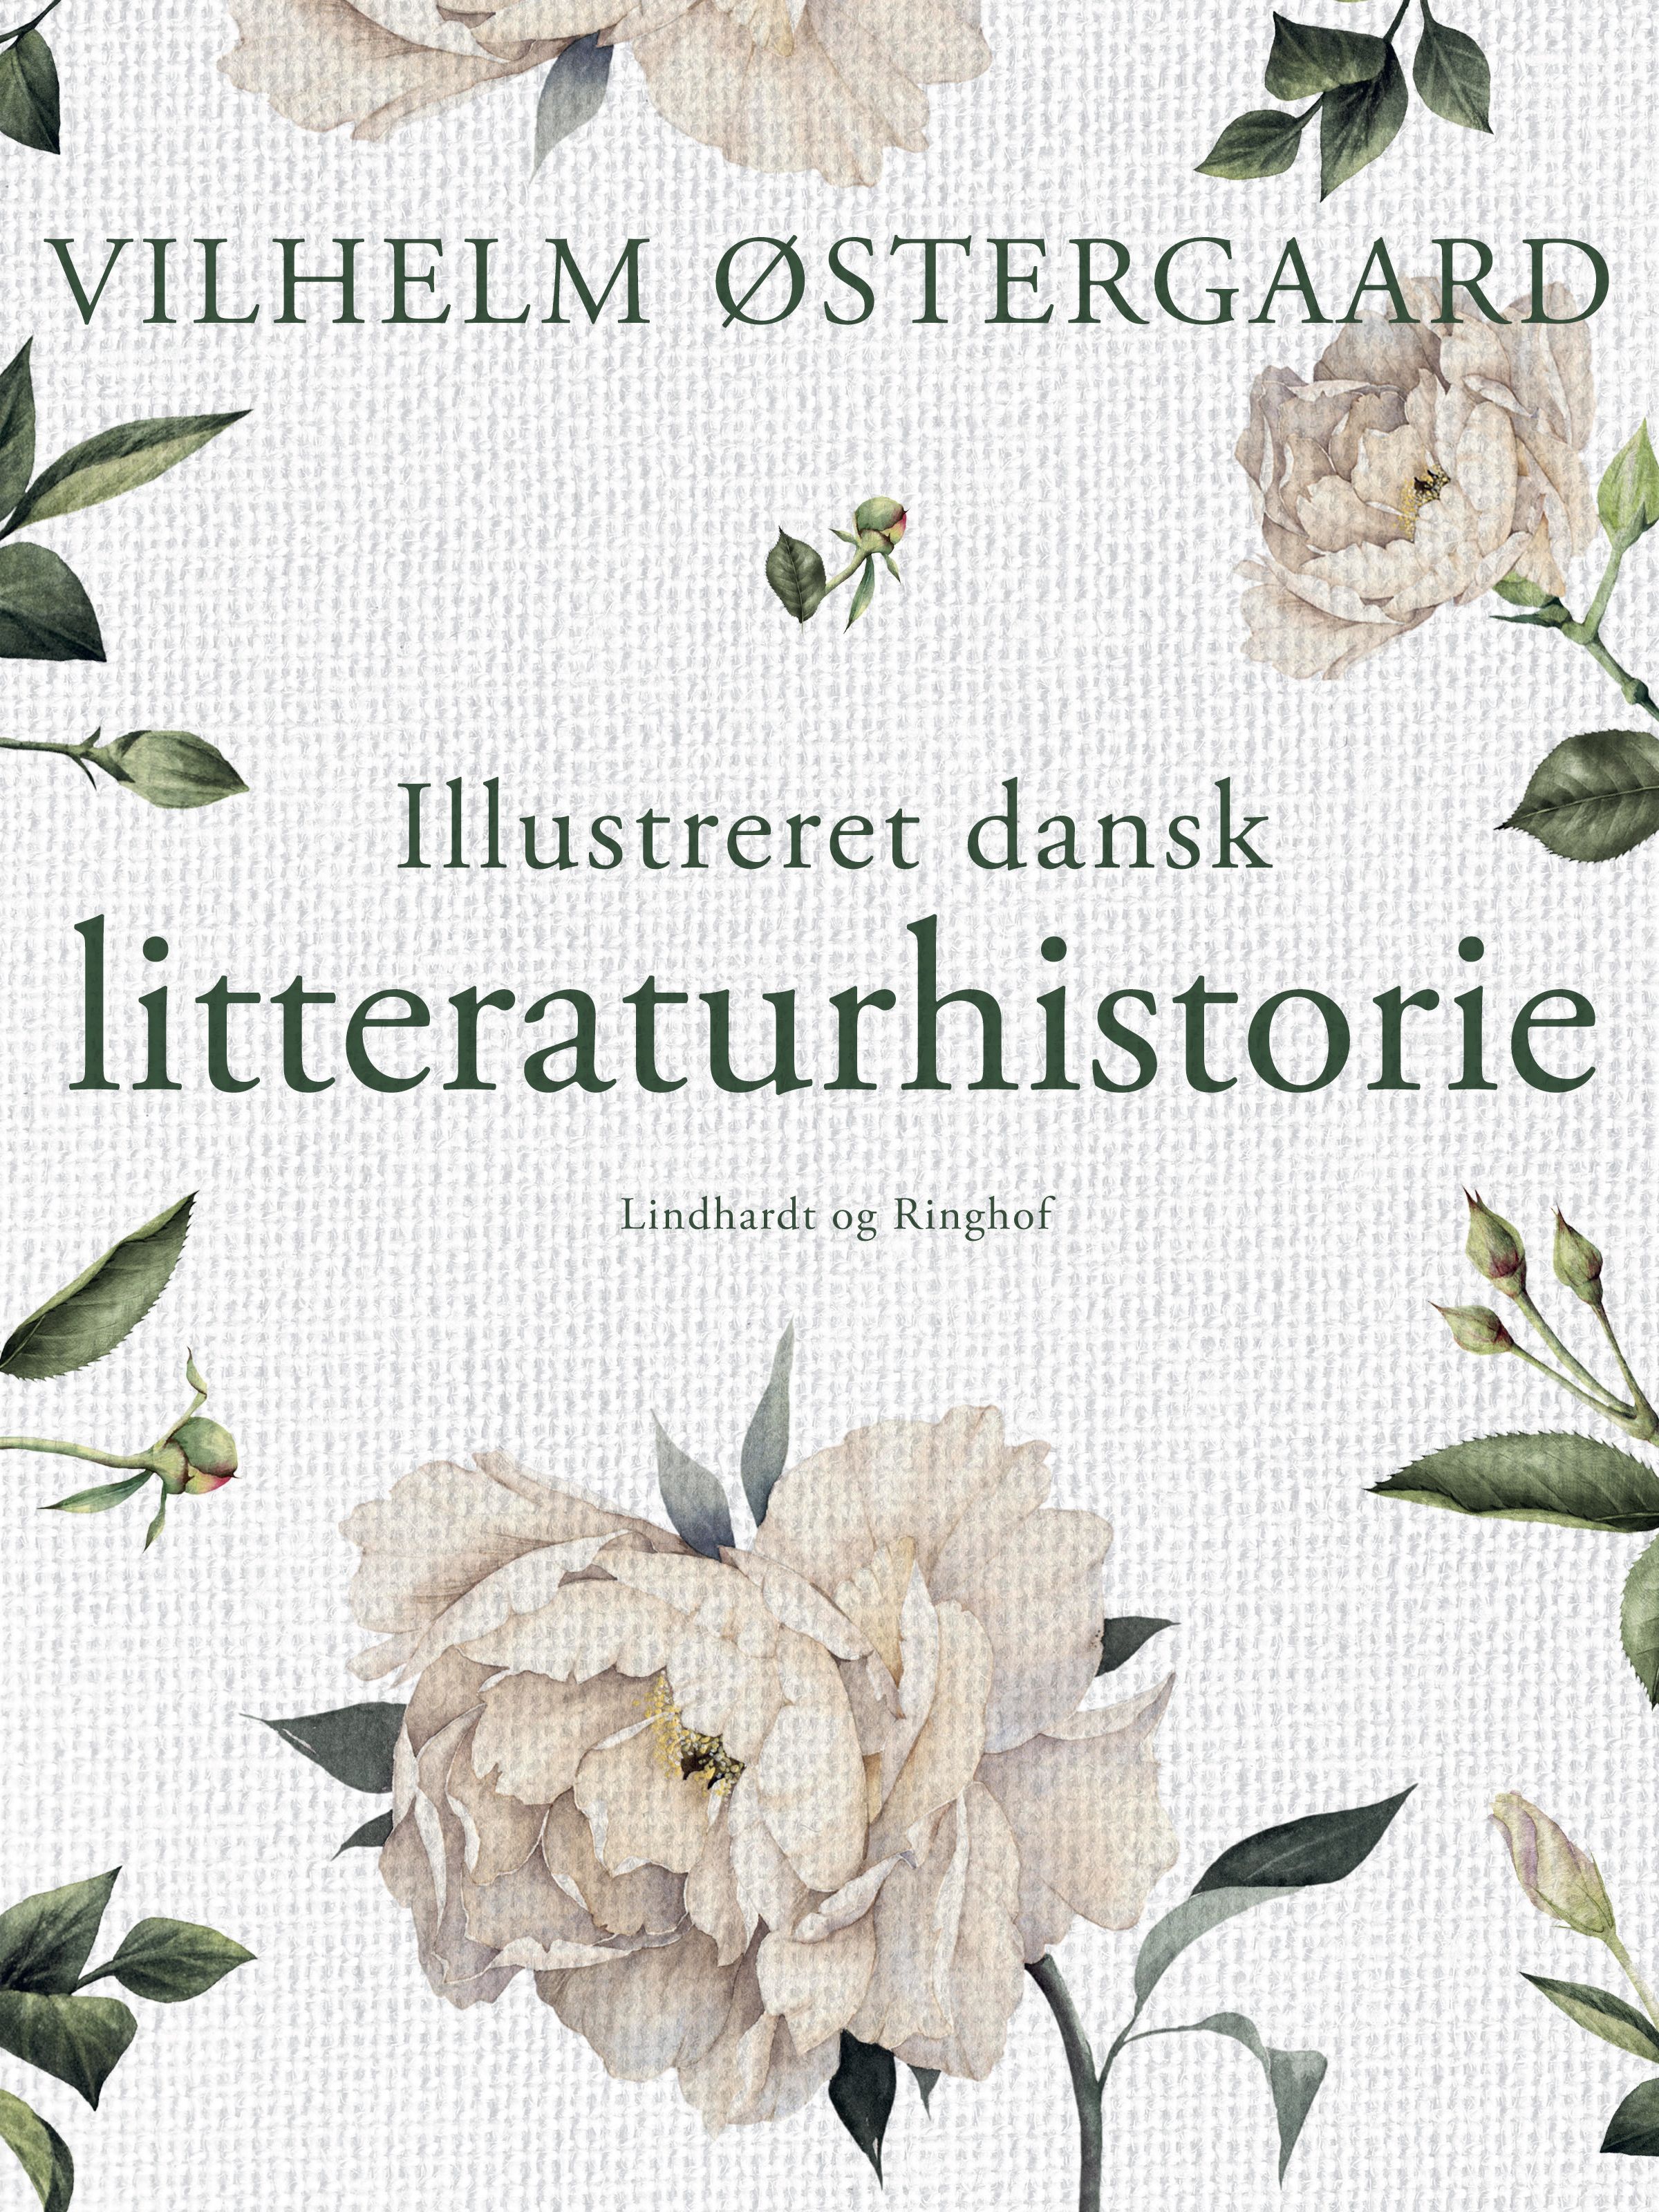 Illustreret dansk litteraturhistorie, eBook by Vilhelm Østergaard